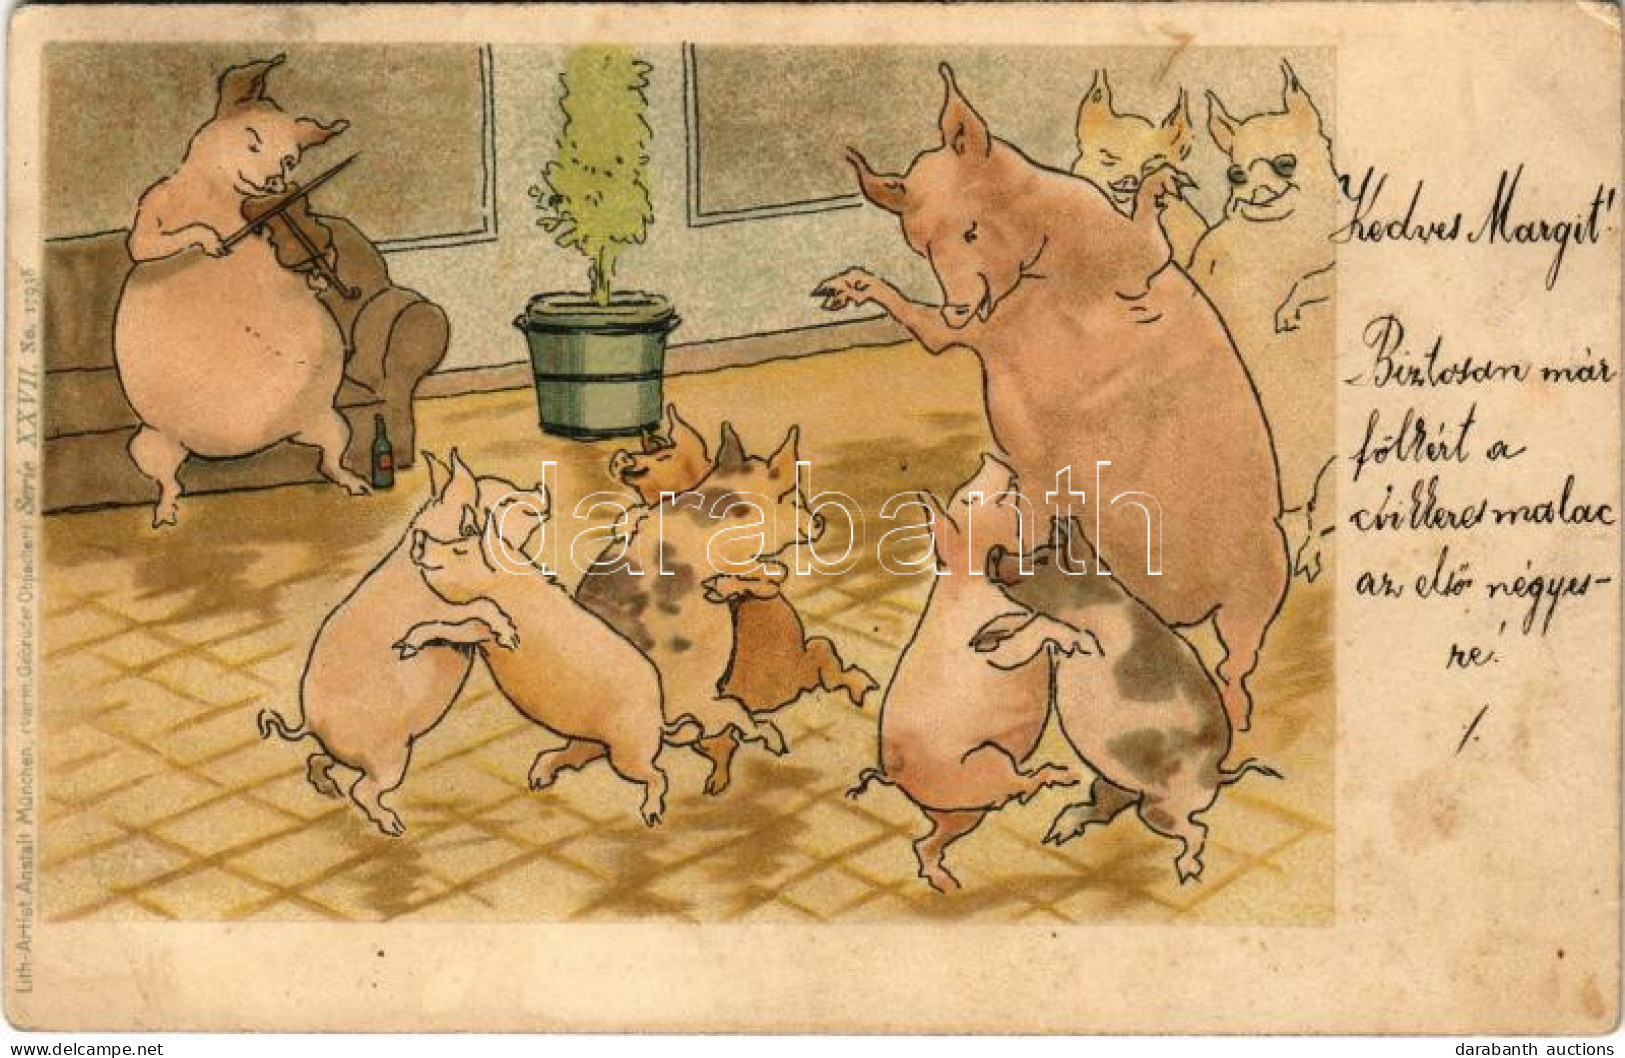 T3 ~1899 (Vorläufer) Malac Buli / Pig Party. Gebrüder Obpacher Serie XXVII. No. 17938. Litho (fl) - Non Classés